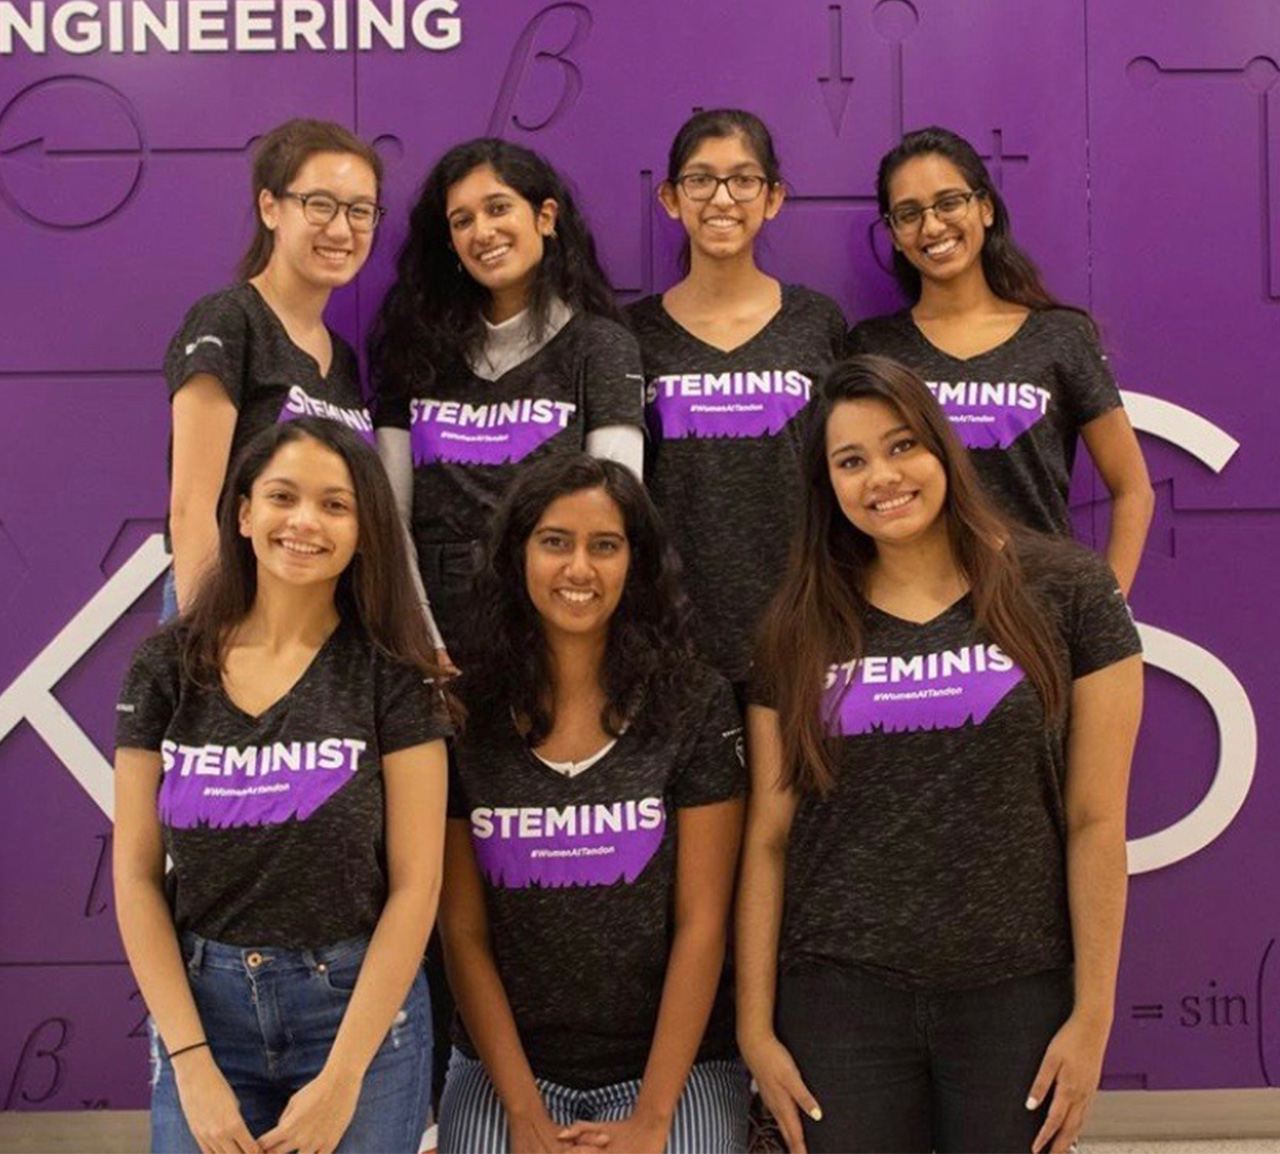 Seven female-presenting members of of the STEMinist club at NYU.